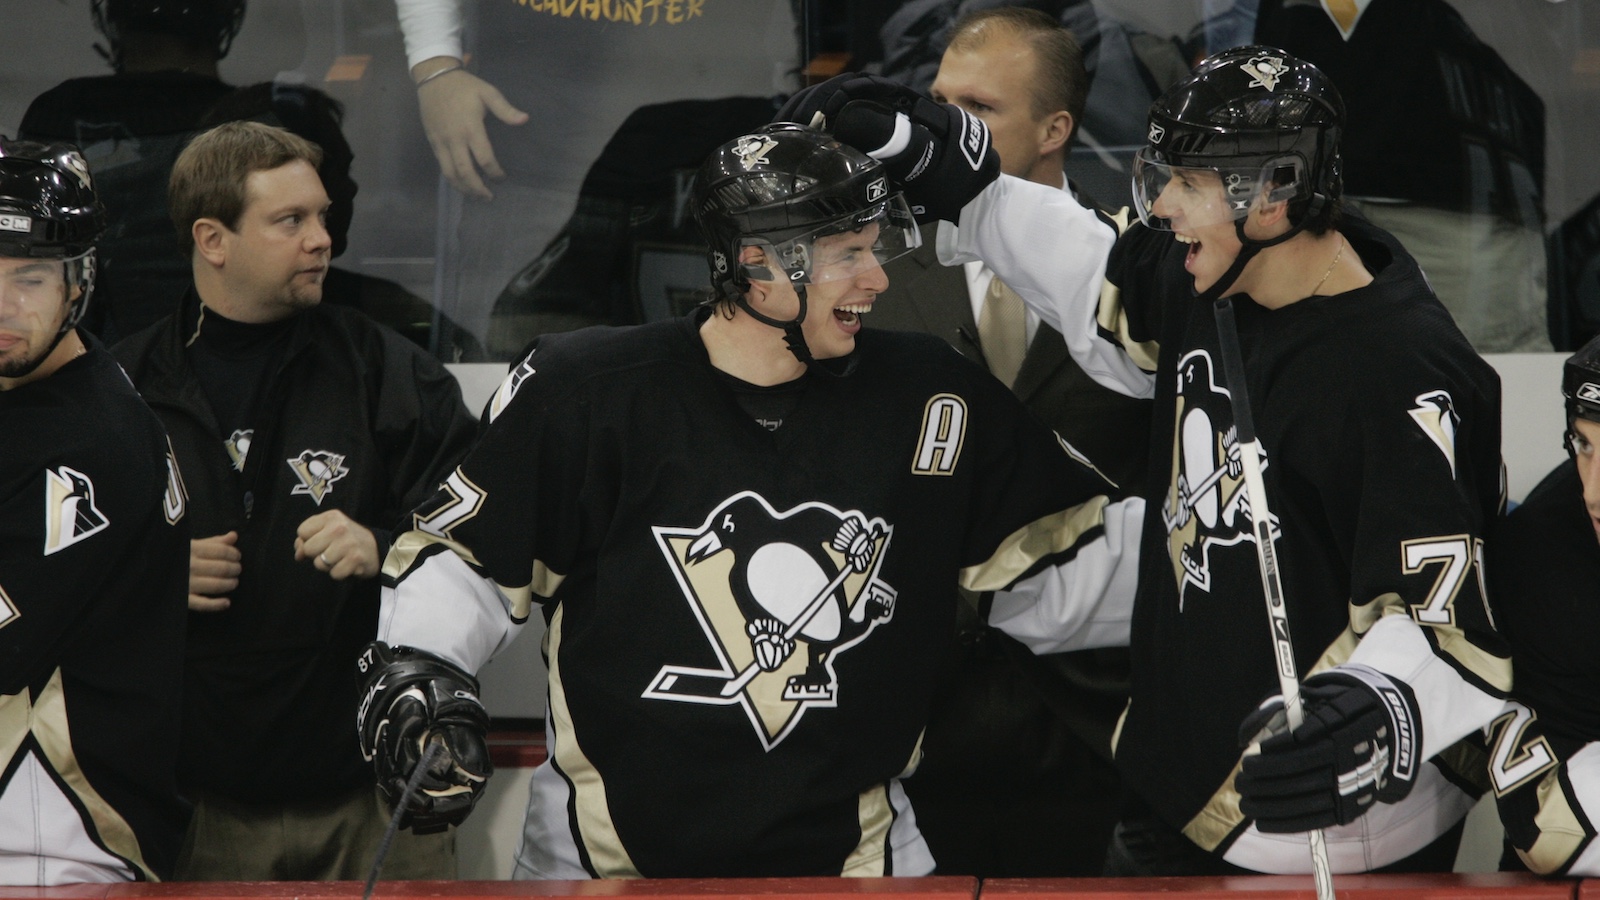 Penguins alternate jerseys: Judging the looks of the Crosby-Malkin